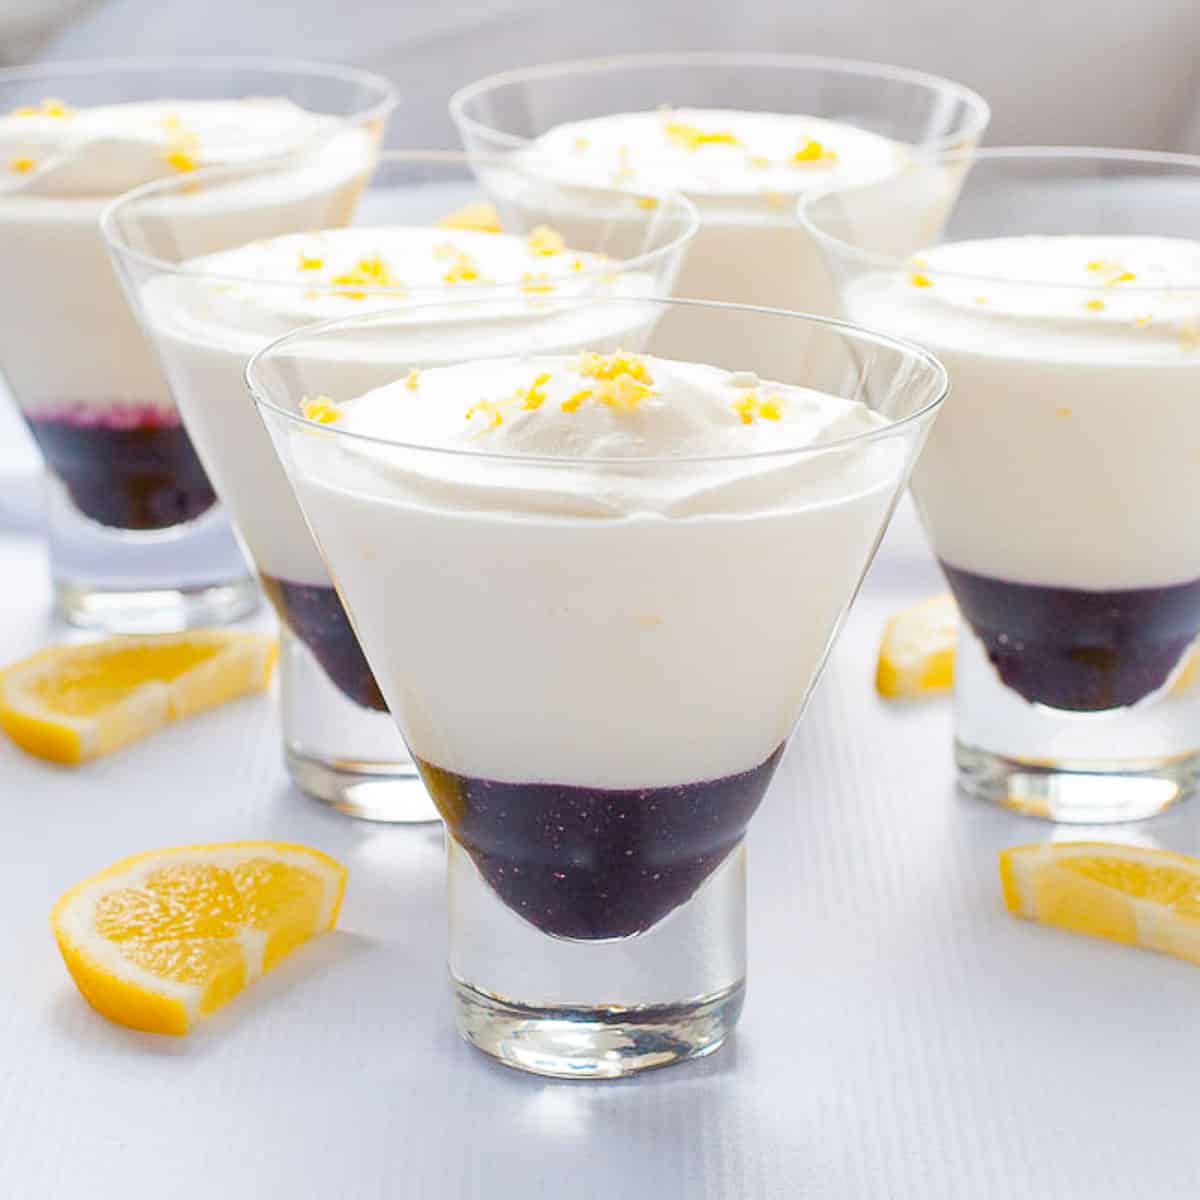 Lemon mousse in dessert glasses with blueberry sauce.